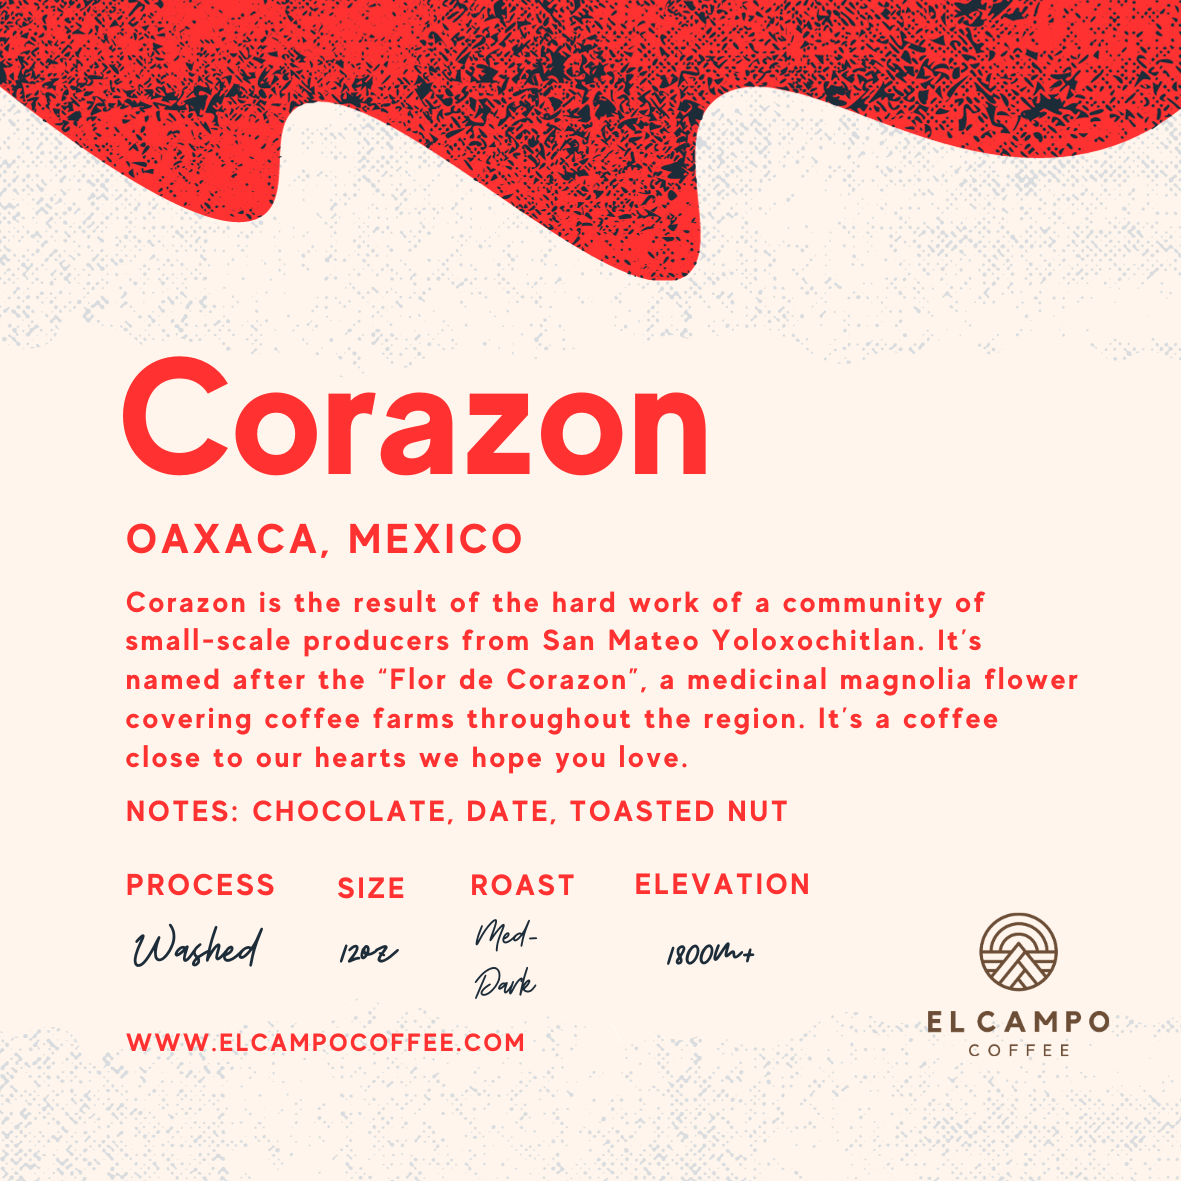 Corazon Oaxaca Mexico